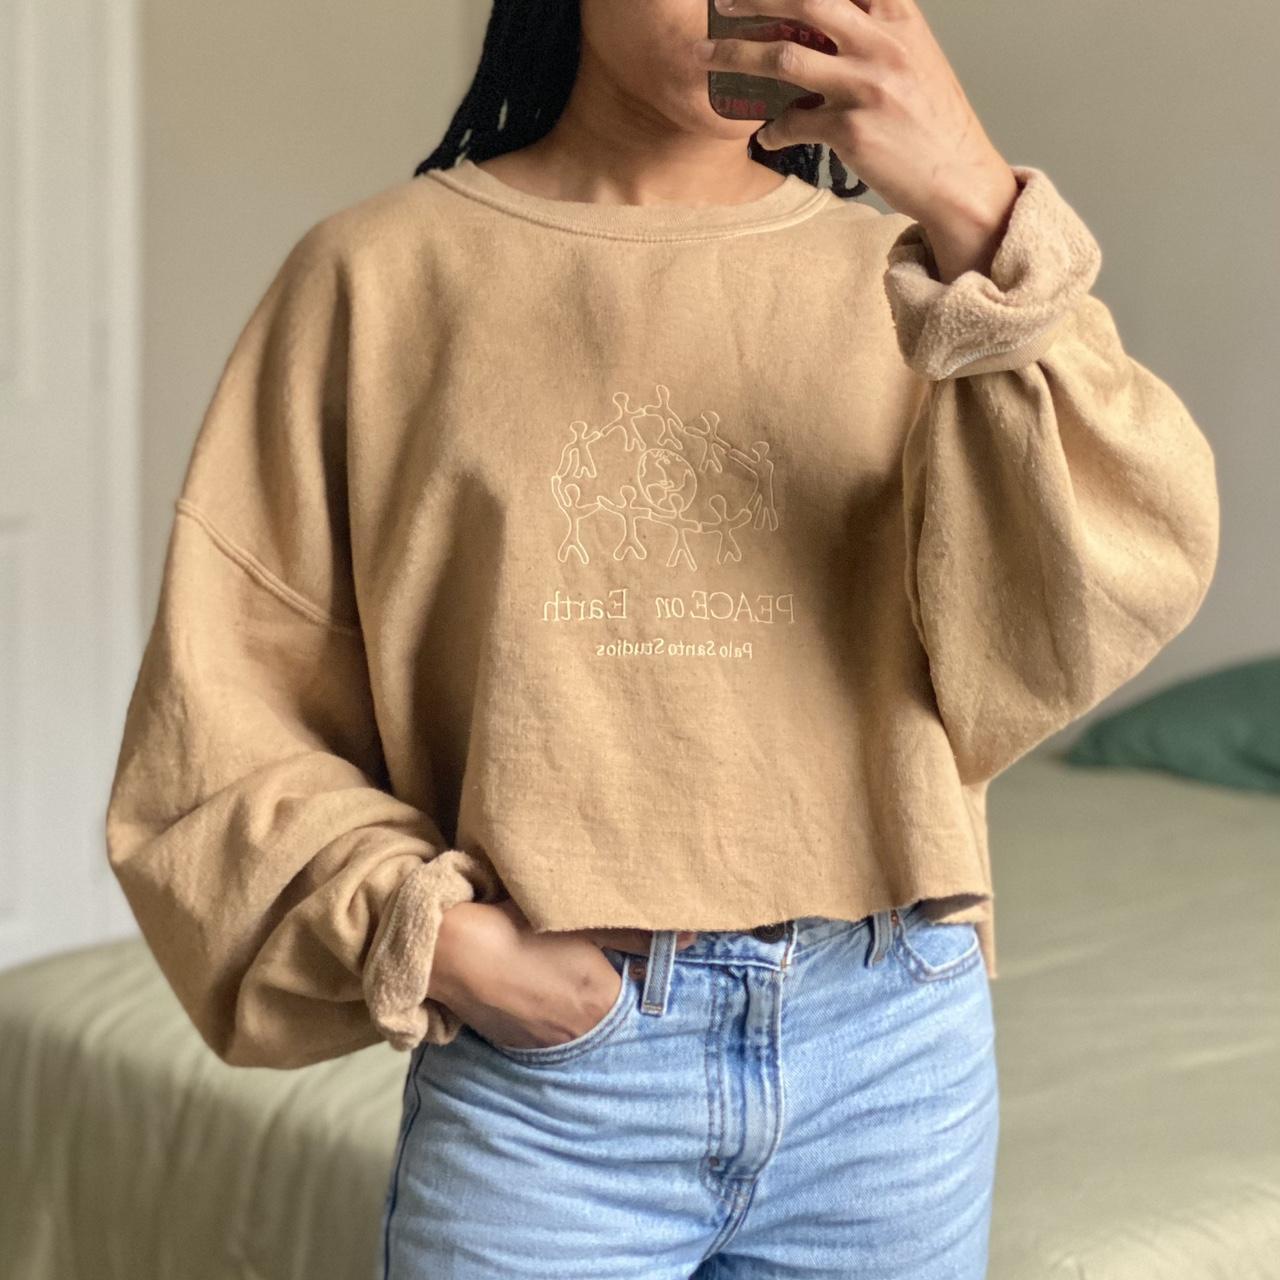 Paloma Wool Women's Tan Sweatshirt